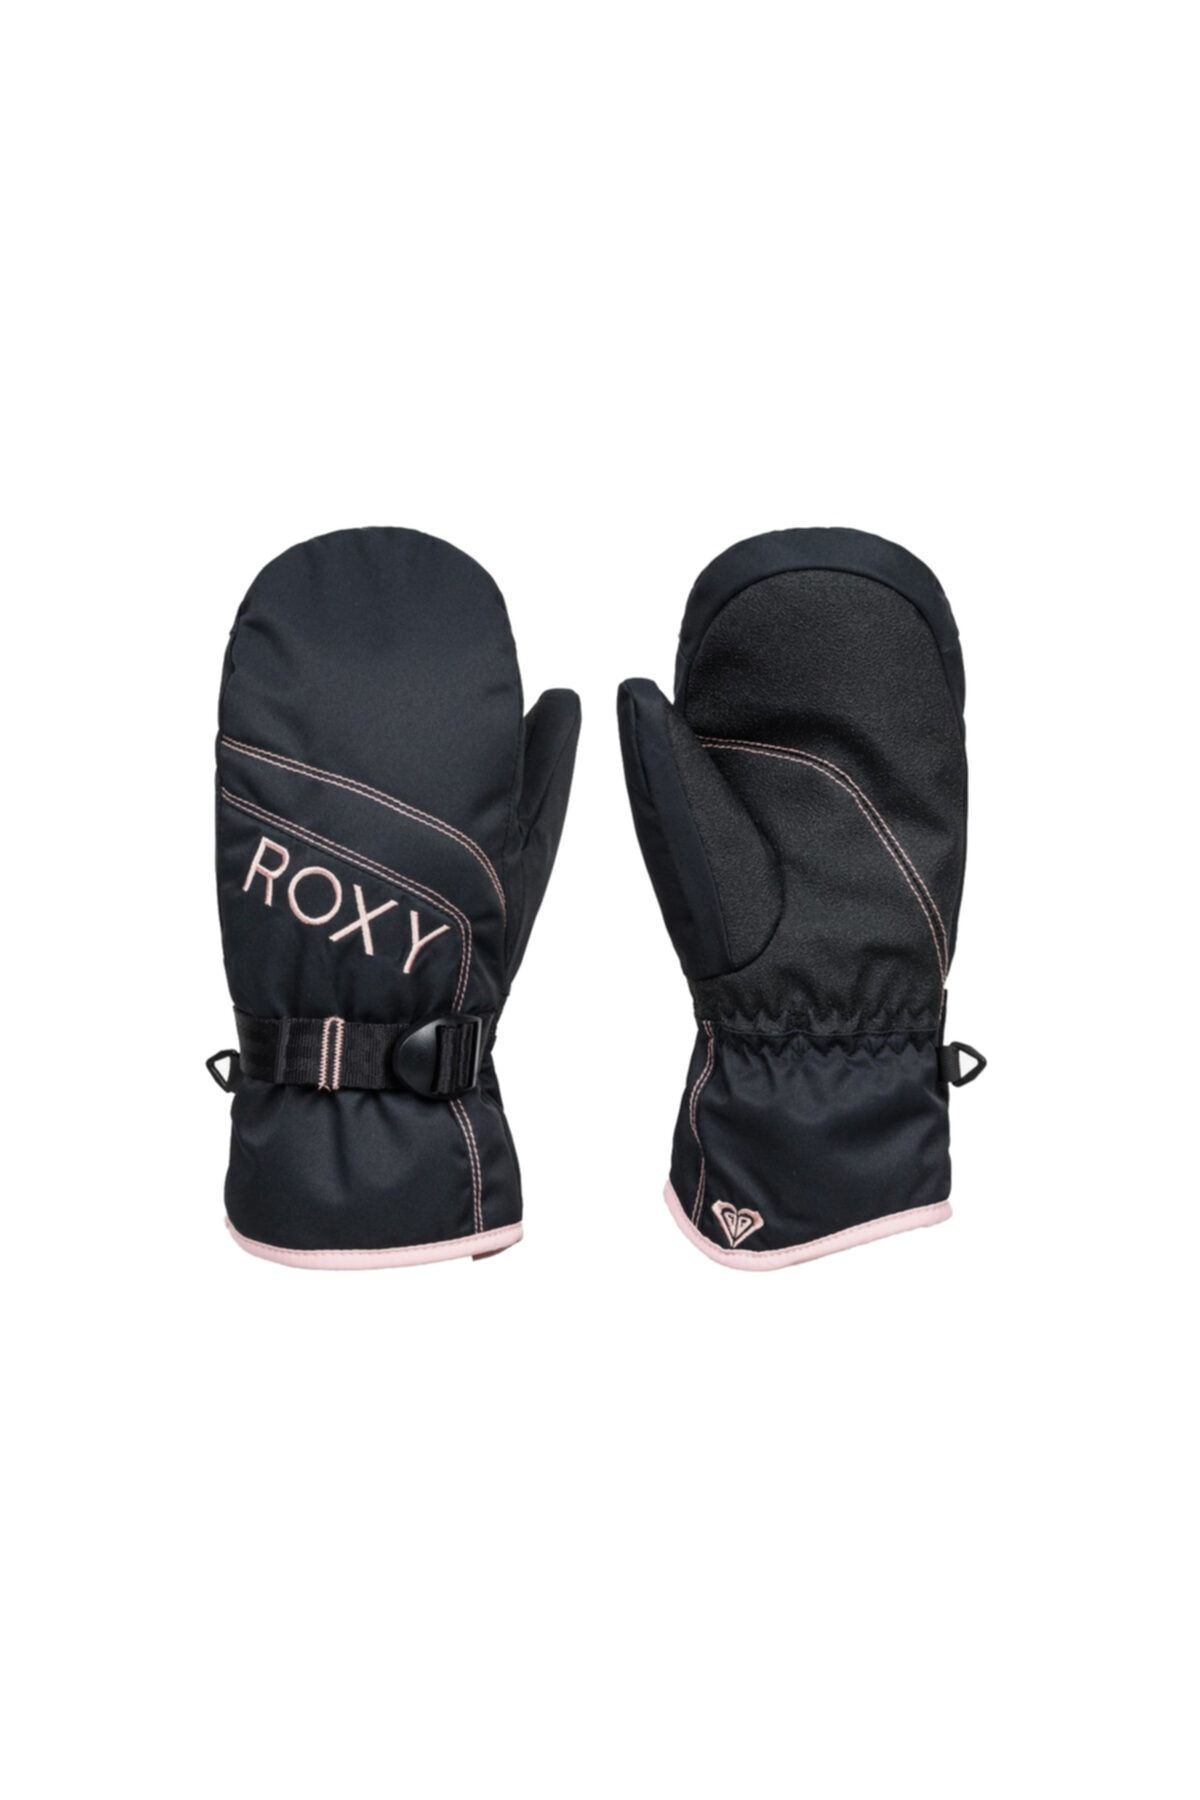 Roxy Jetty So Çocuk Kayak/snowboard Eldiveni